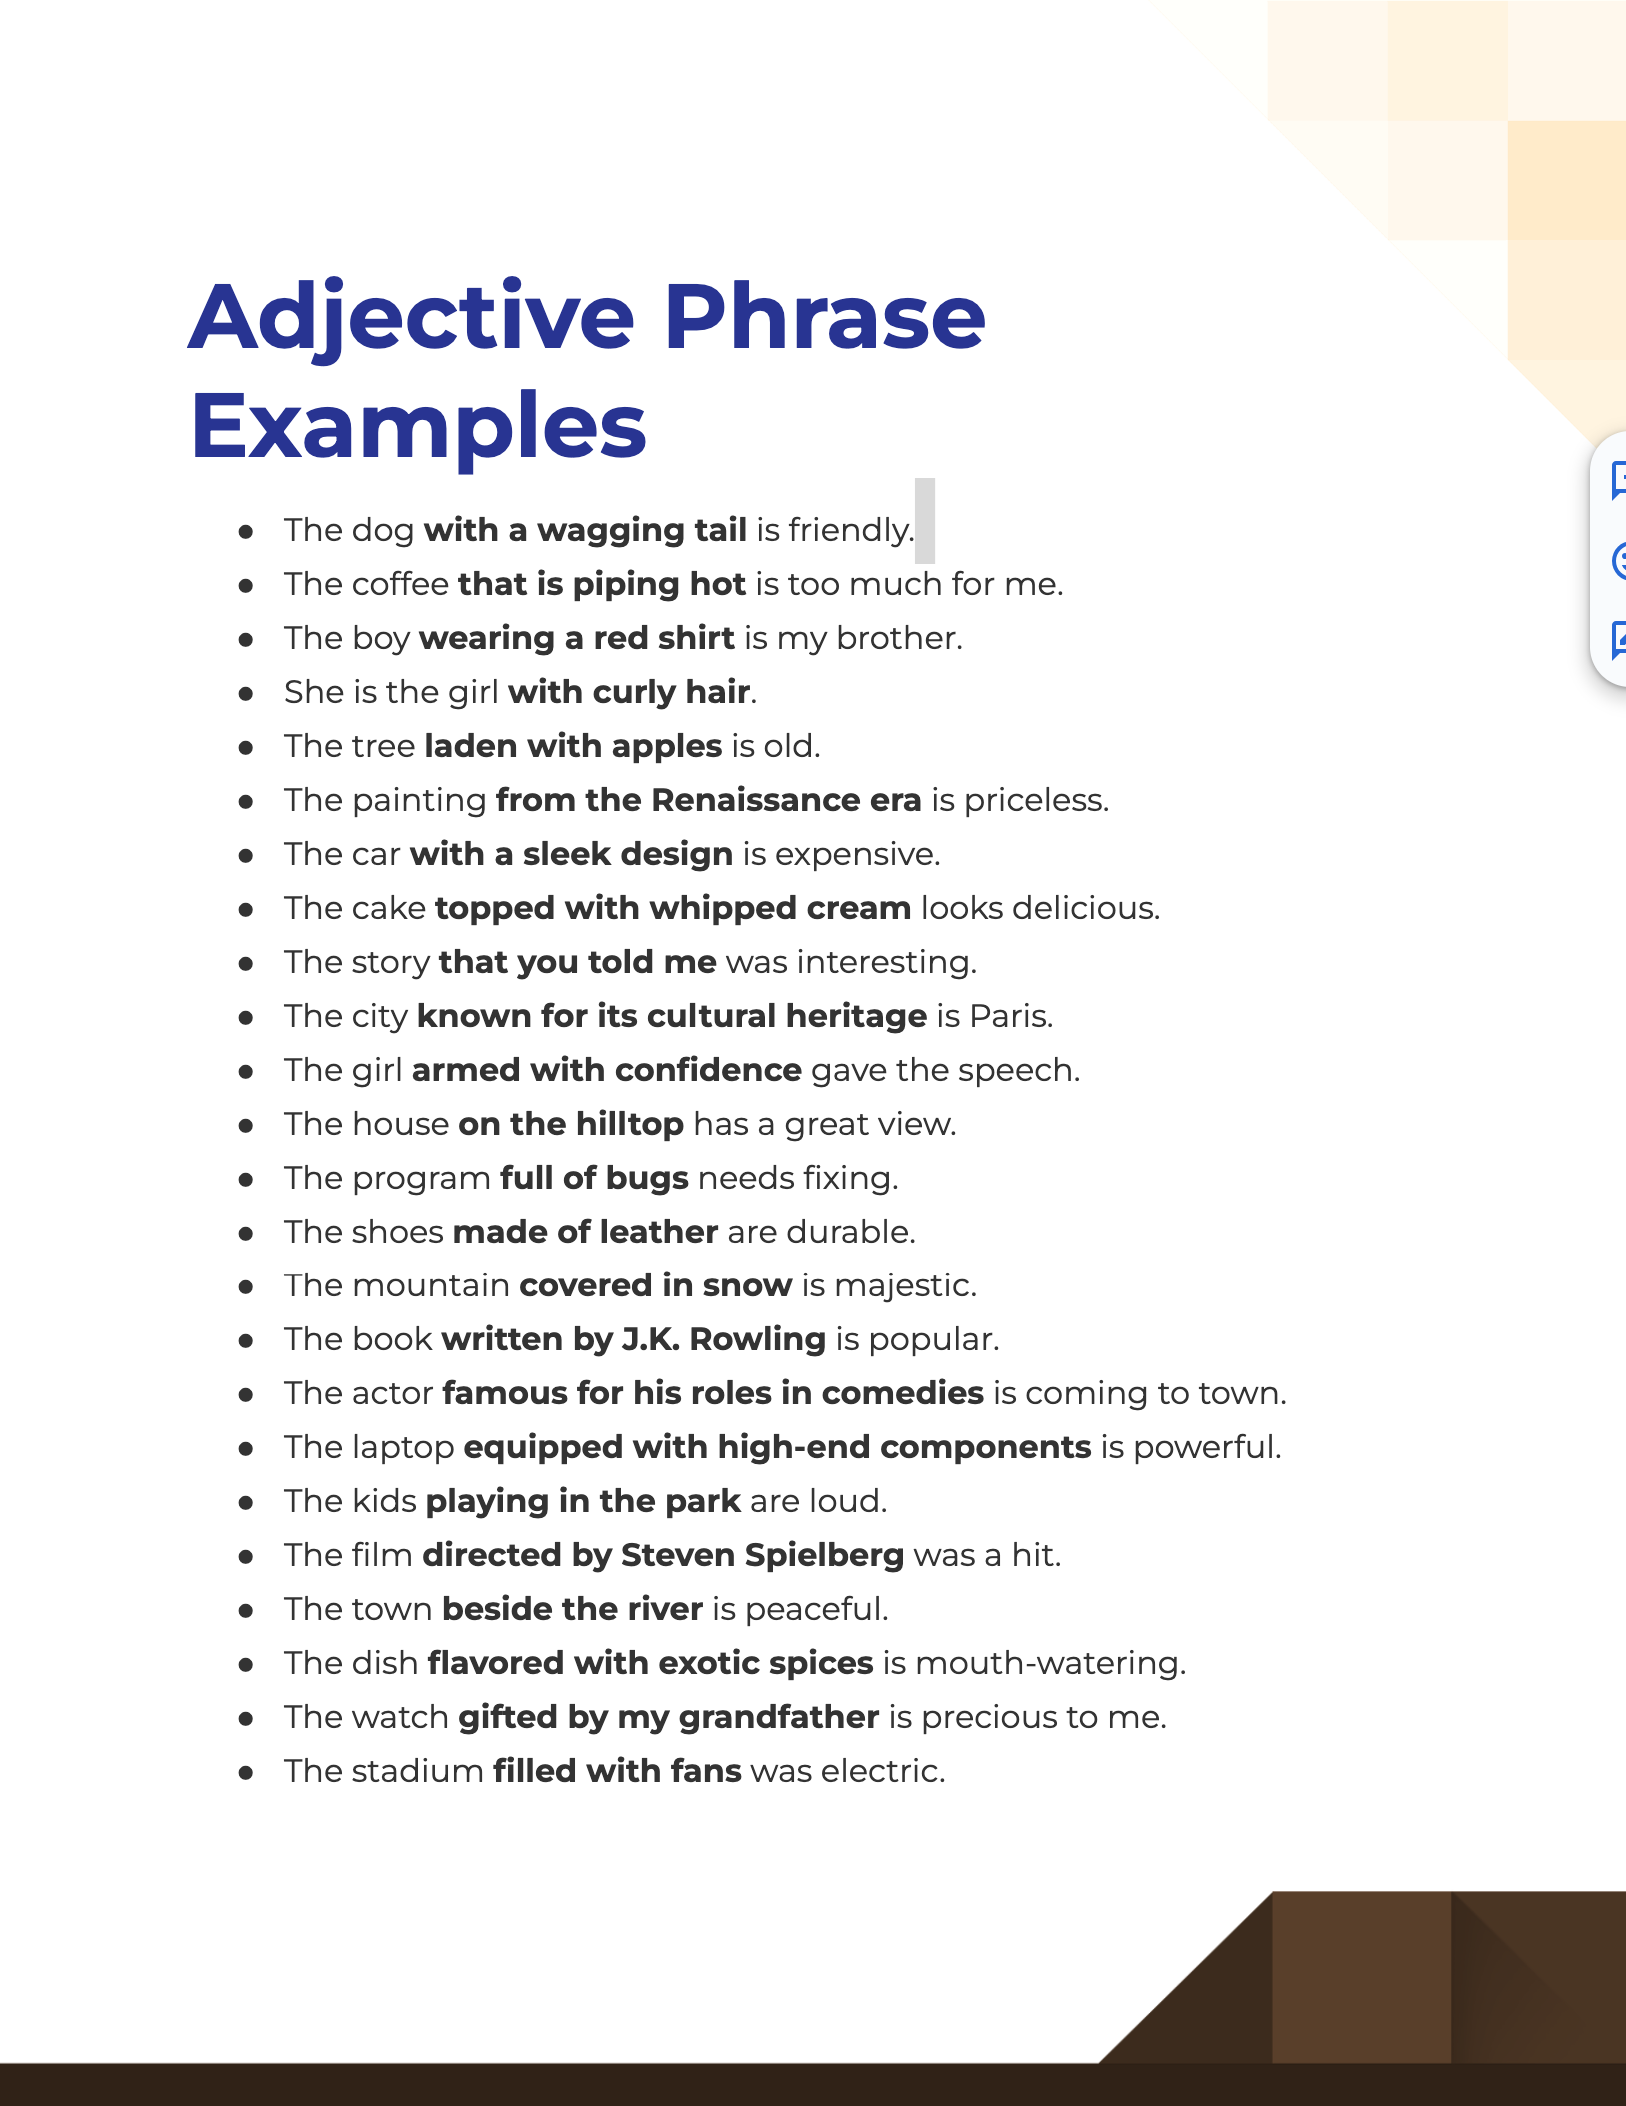 adjective phrase examples1